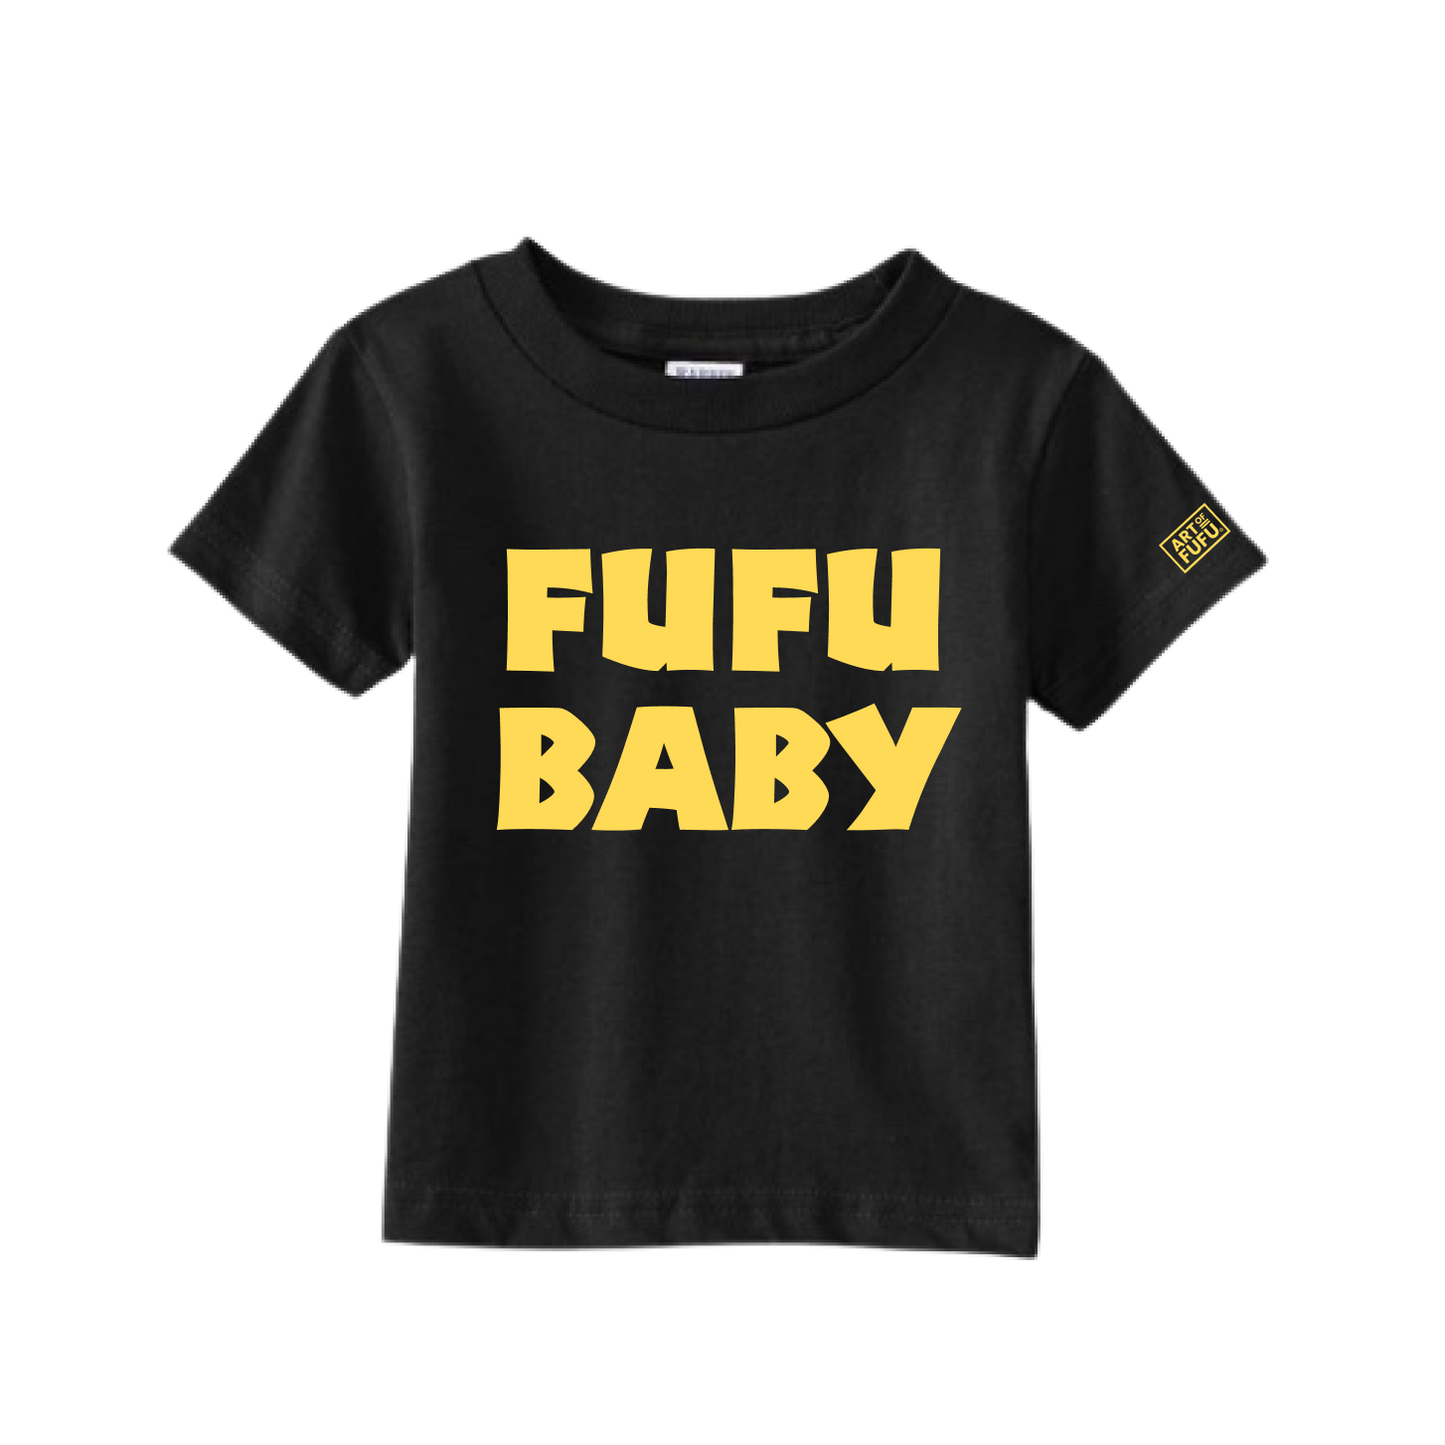 Fufu Baby T-shirt